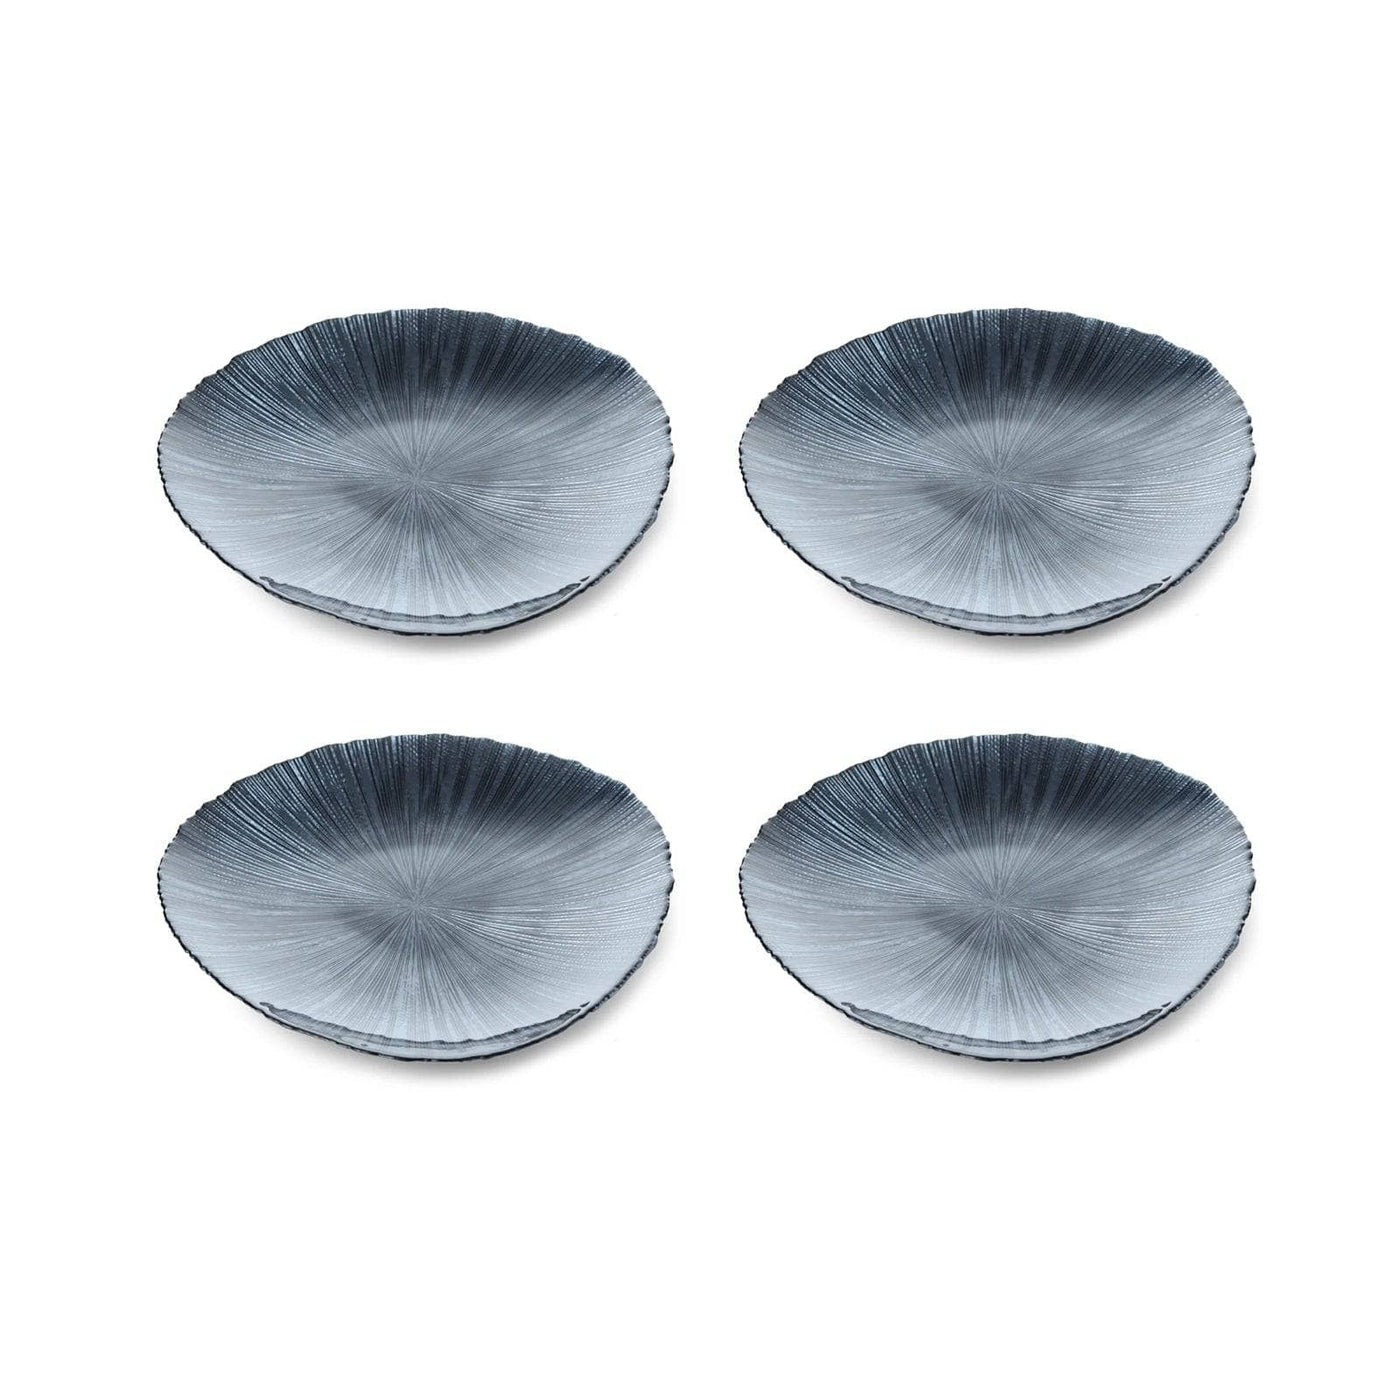 Tamara Set of 4 Dinner Plates, Charcoal 1